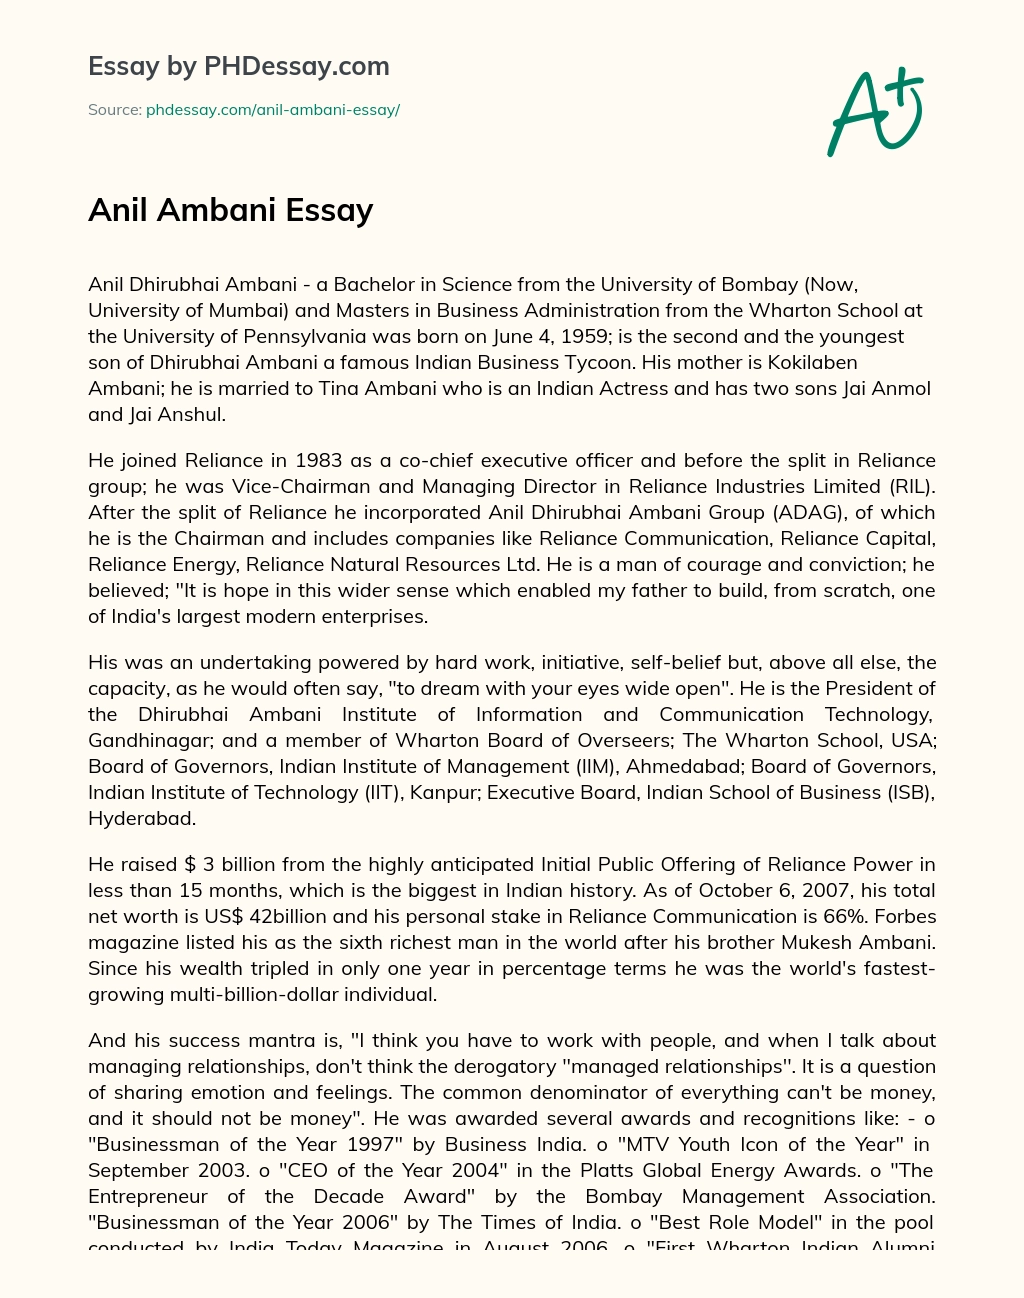 Profile of Anil Dhirubhai Ambani, Chairman of ADAG and son of Indian Business Tycoon Dhirubhai Ambani. essay